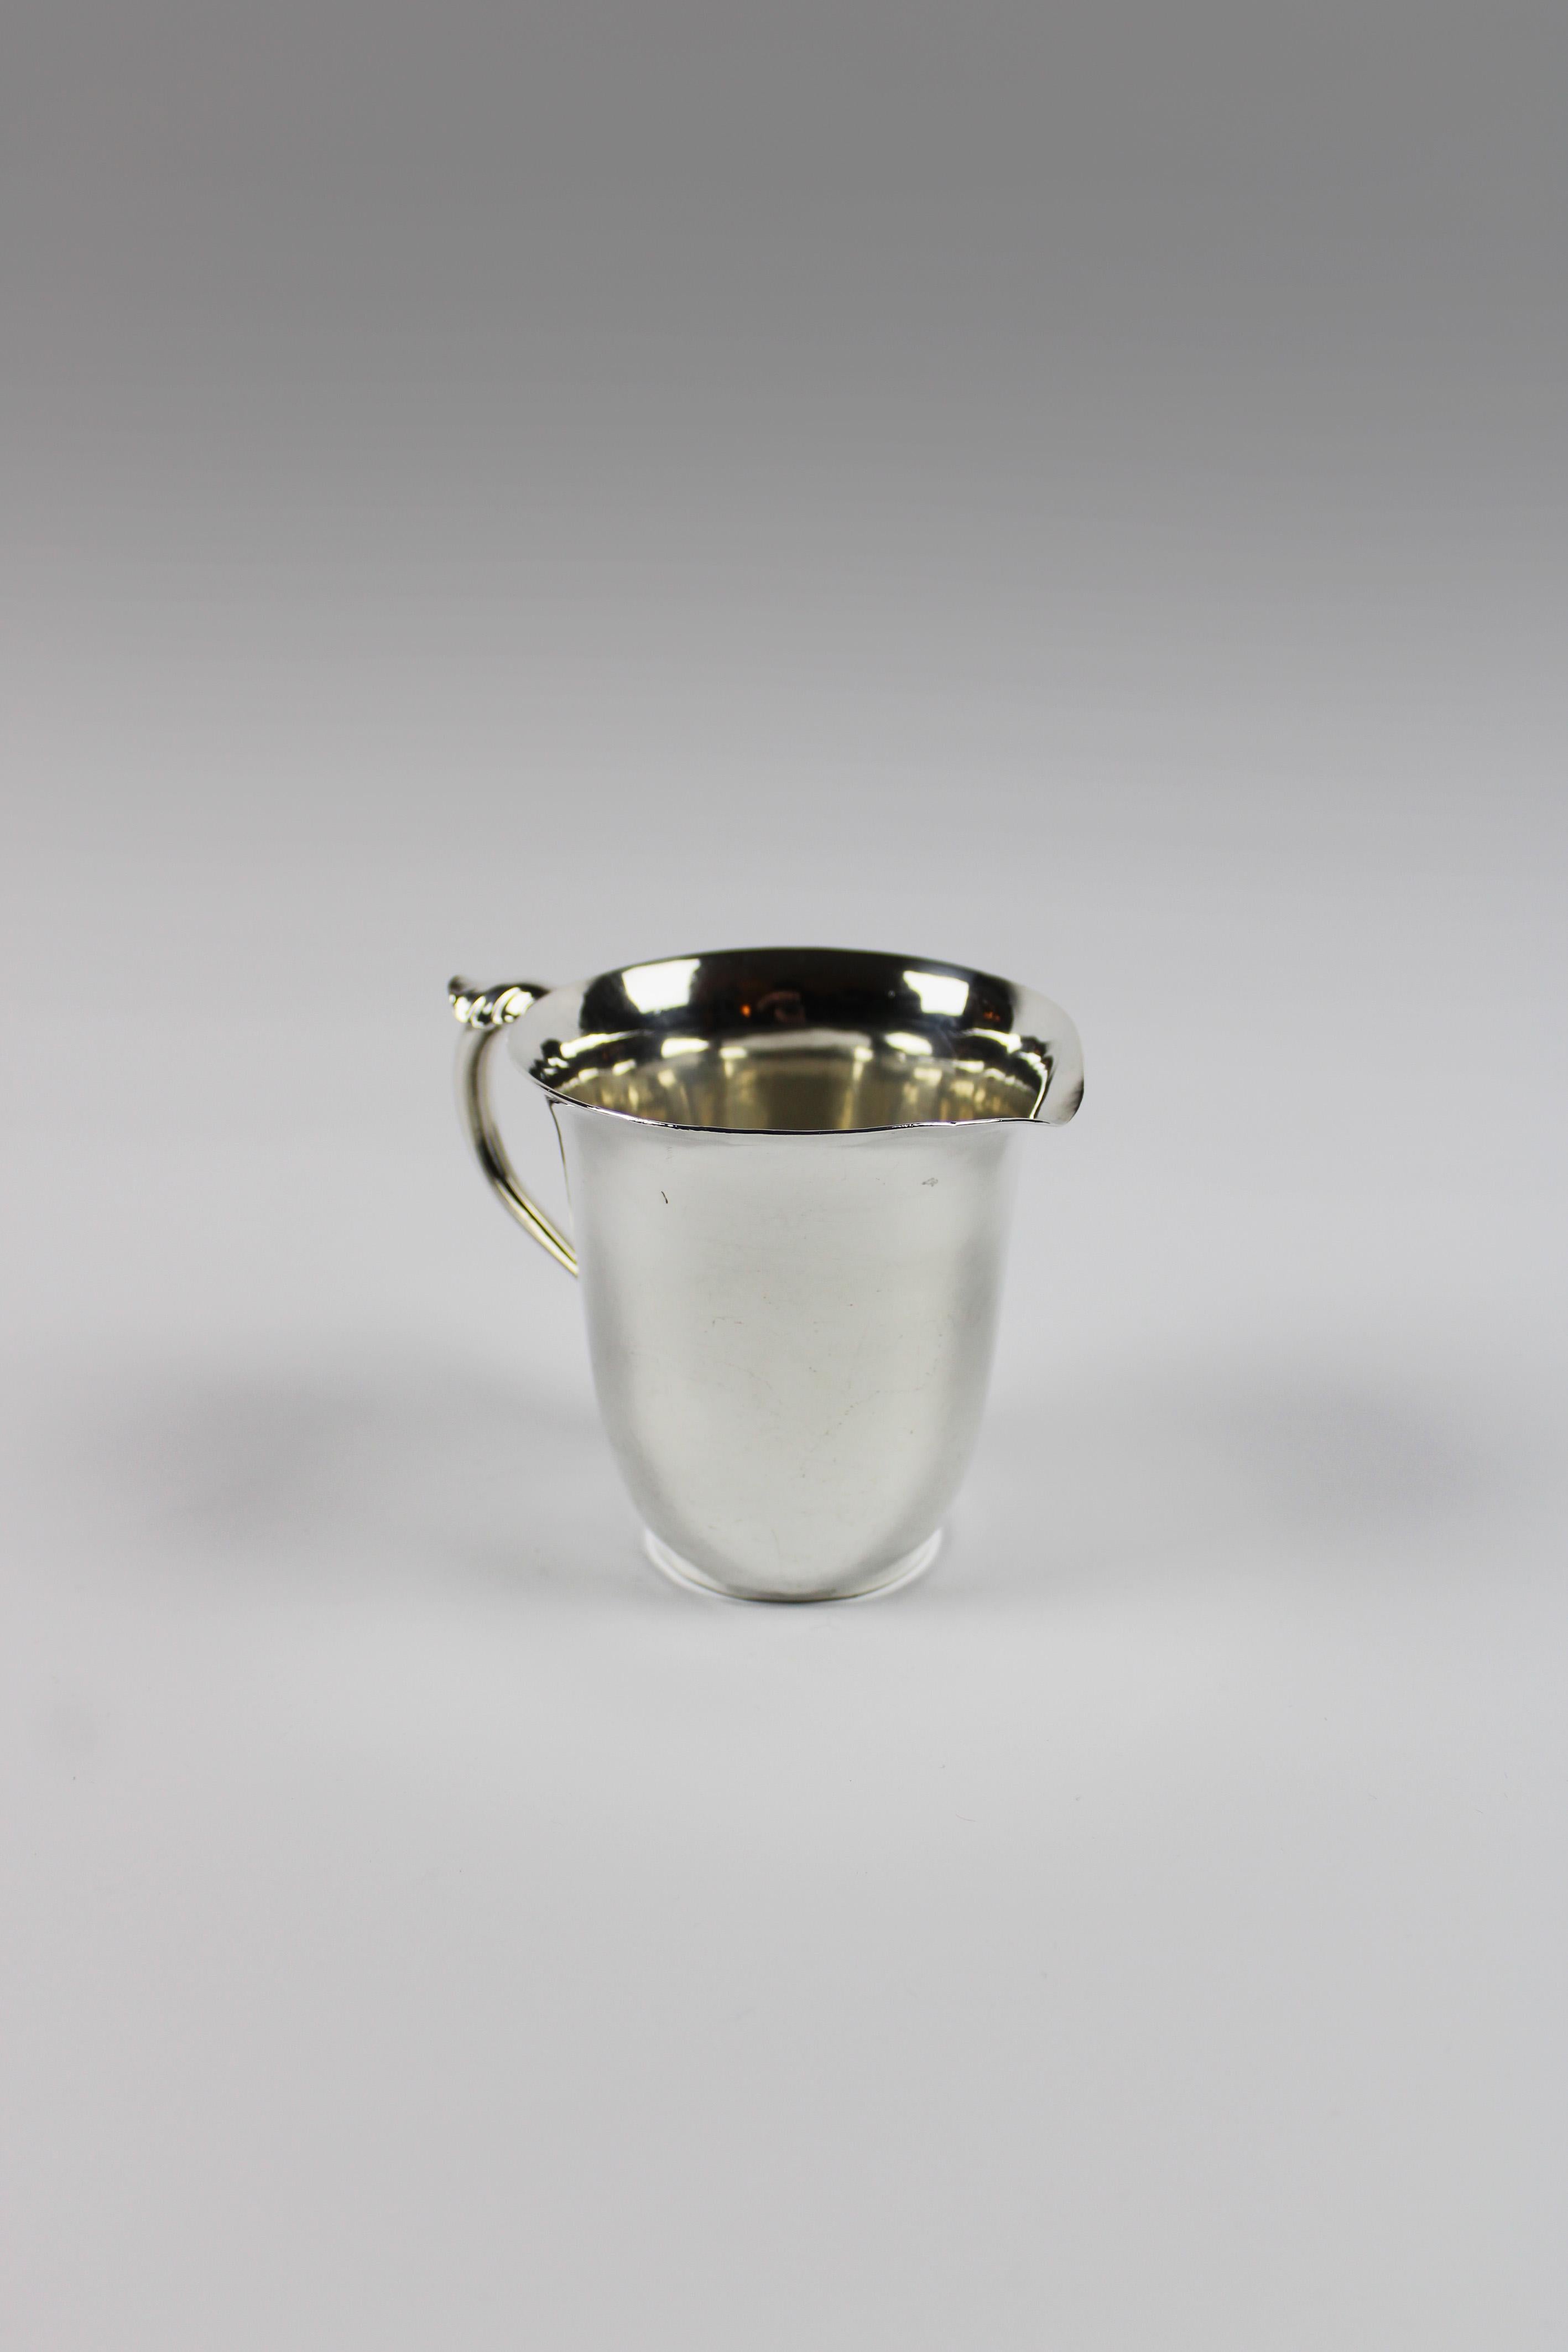 Art Deco Silver Cream Jug Georg Jensen Sterling Silver Cup by Harald Nielsen 1938 Denmark For Sale